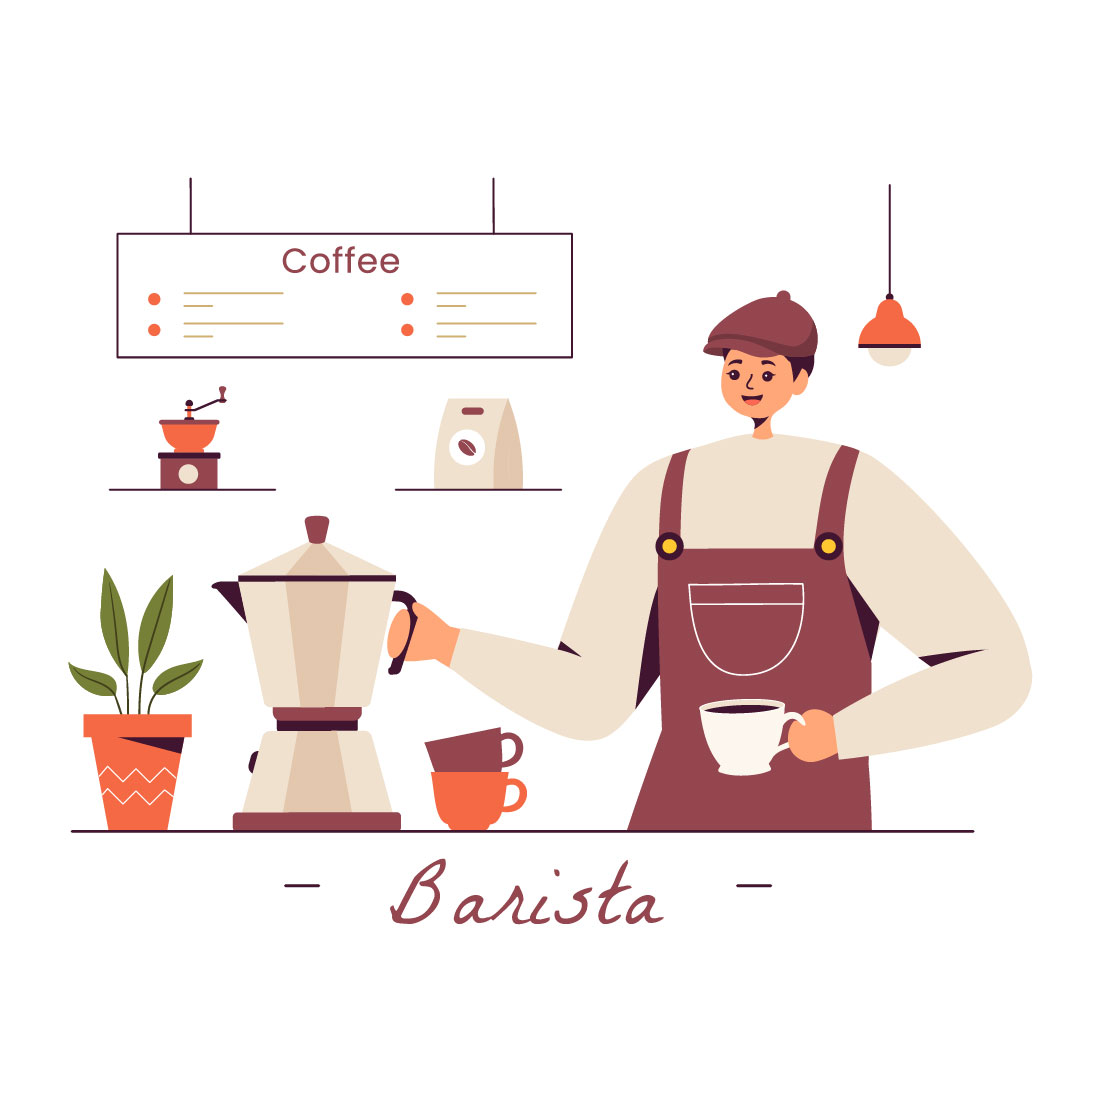 9 Barista Making Coffee Illustration cover image.